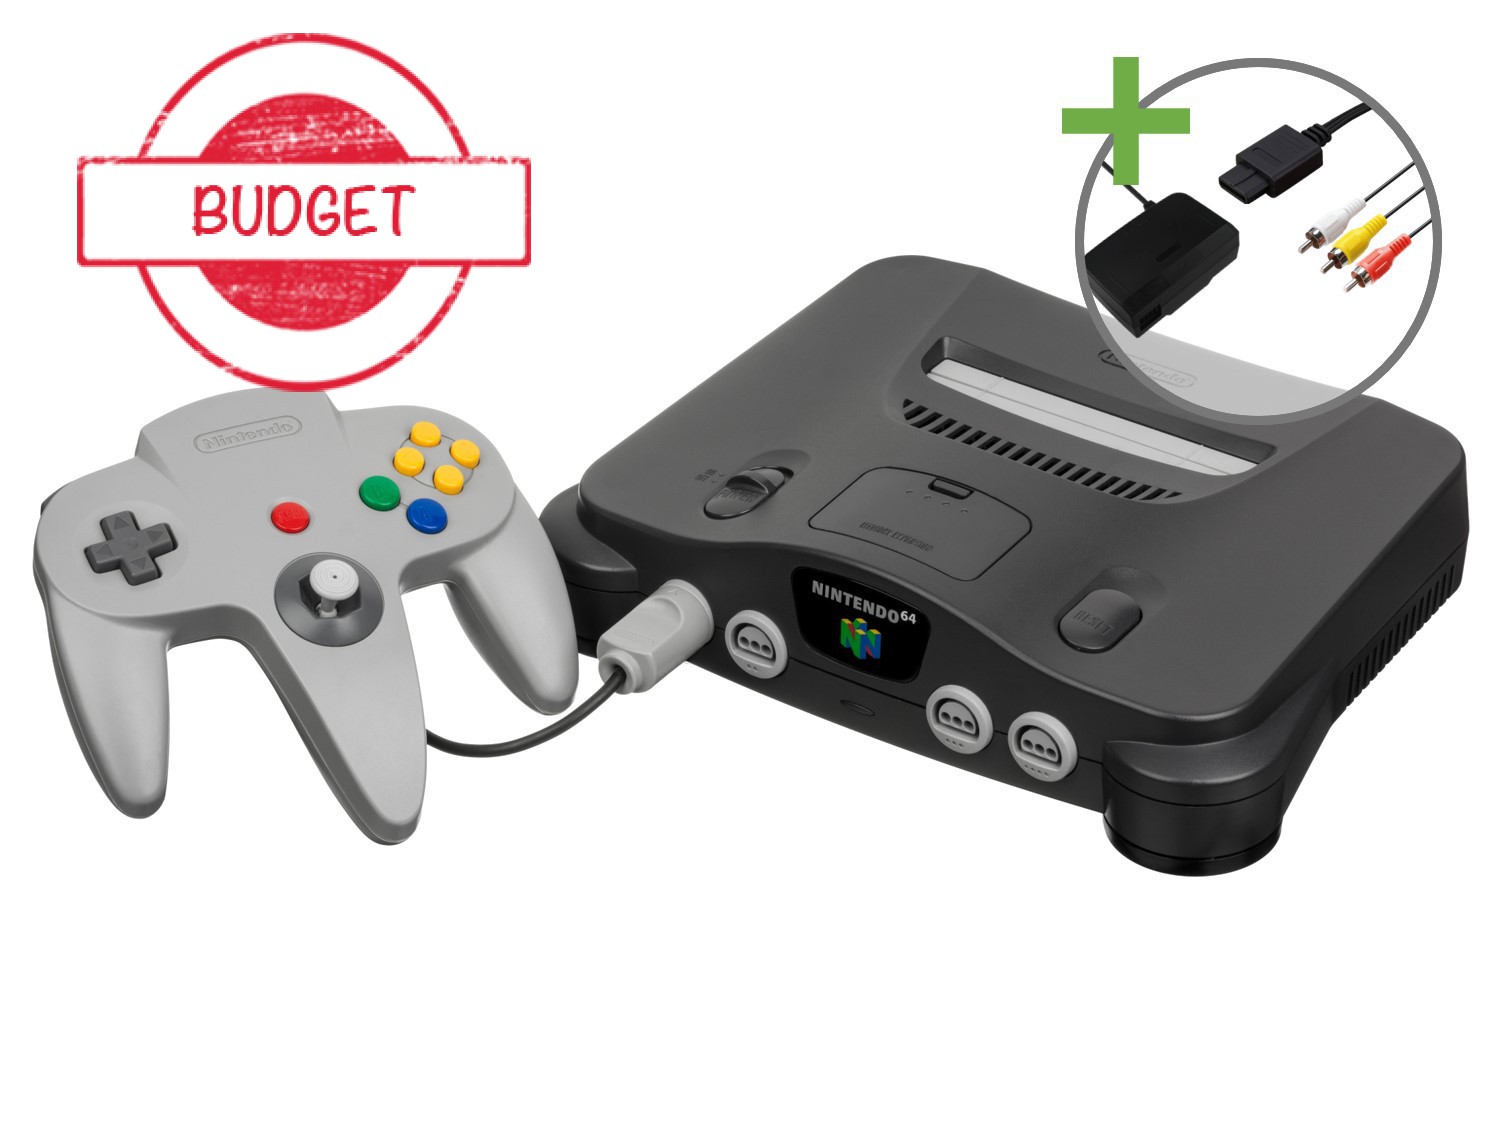 Nintendo 64 Starter Pack - Control Deck Edition - Budget - Nintendo 64 Hardware